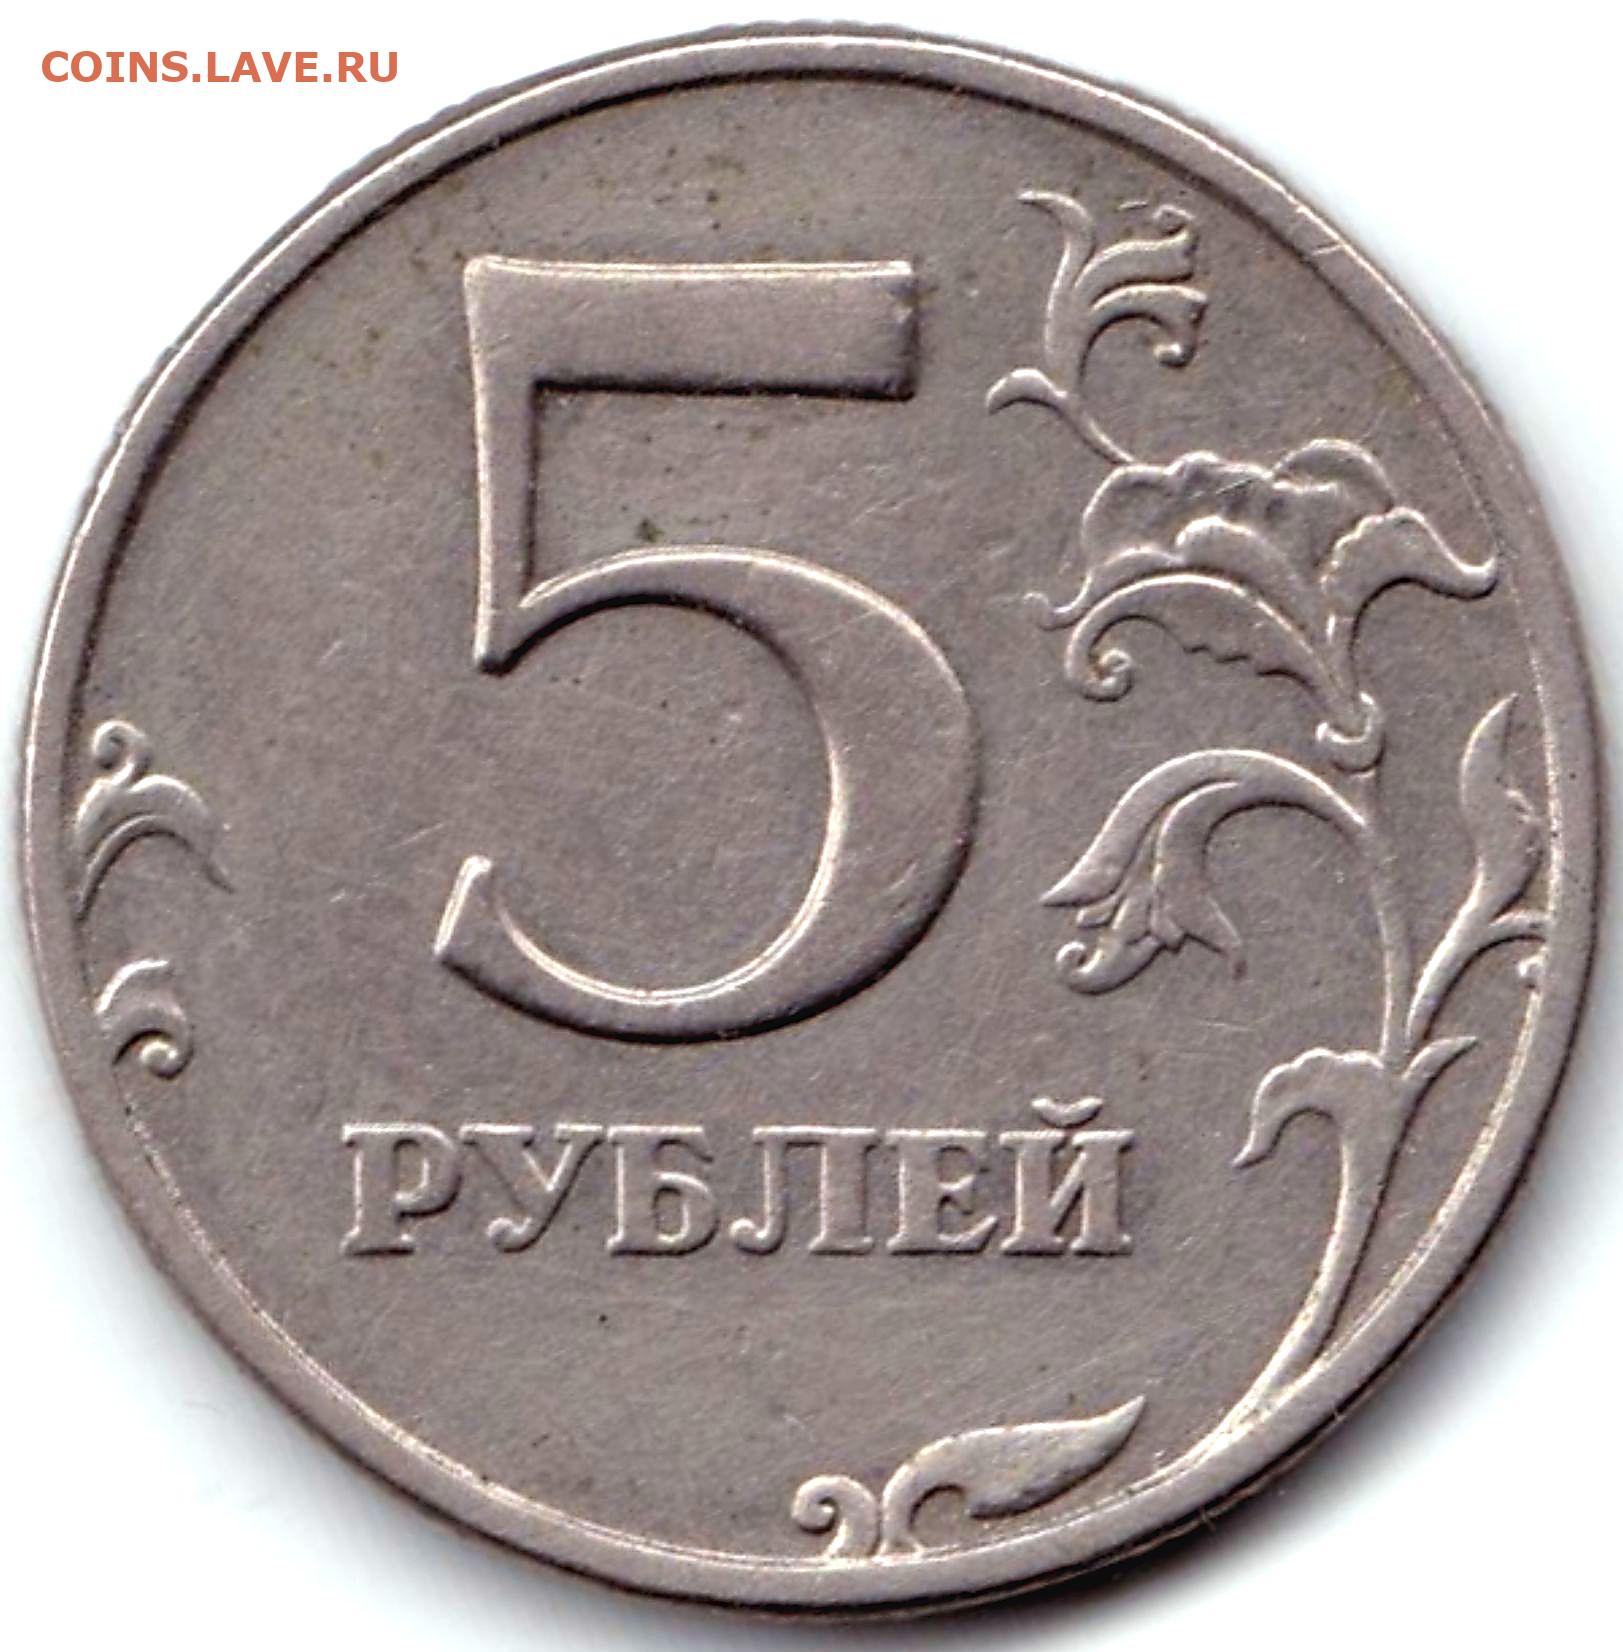 Монета 11 5 рублей. 5 Рублей 2015 ММД. 5 Рублей 1997 ММД брак штампа Канта. Монета 5 рублей. Монетка 5 рублей.